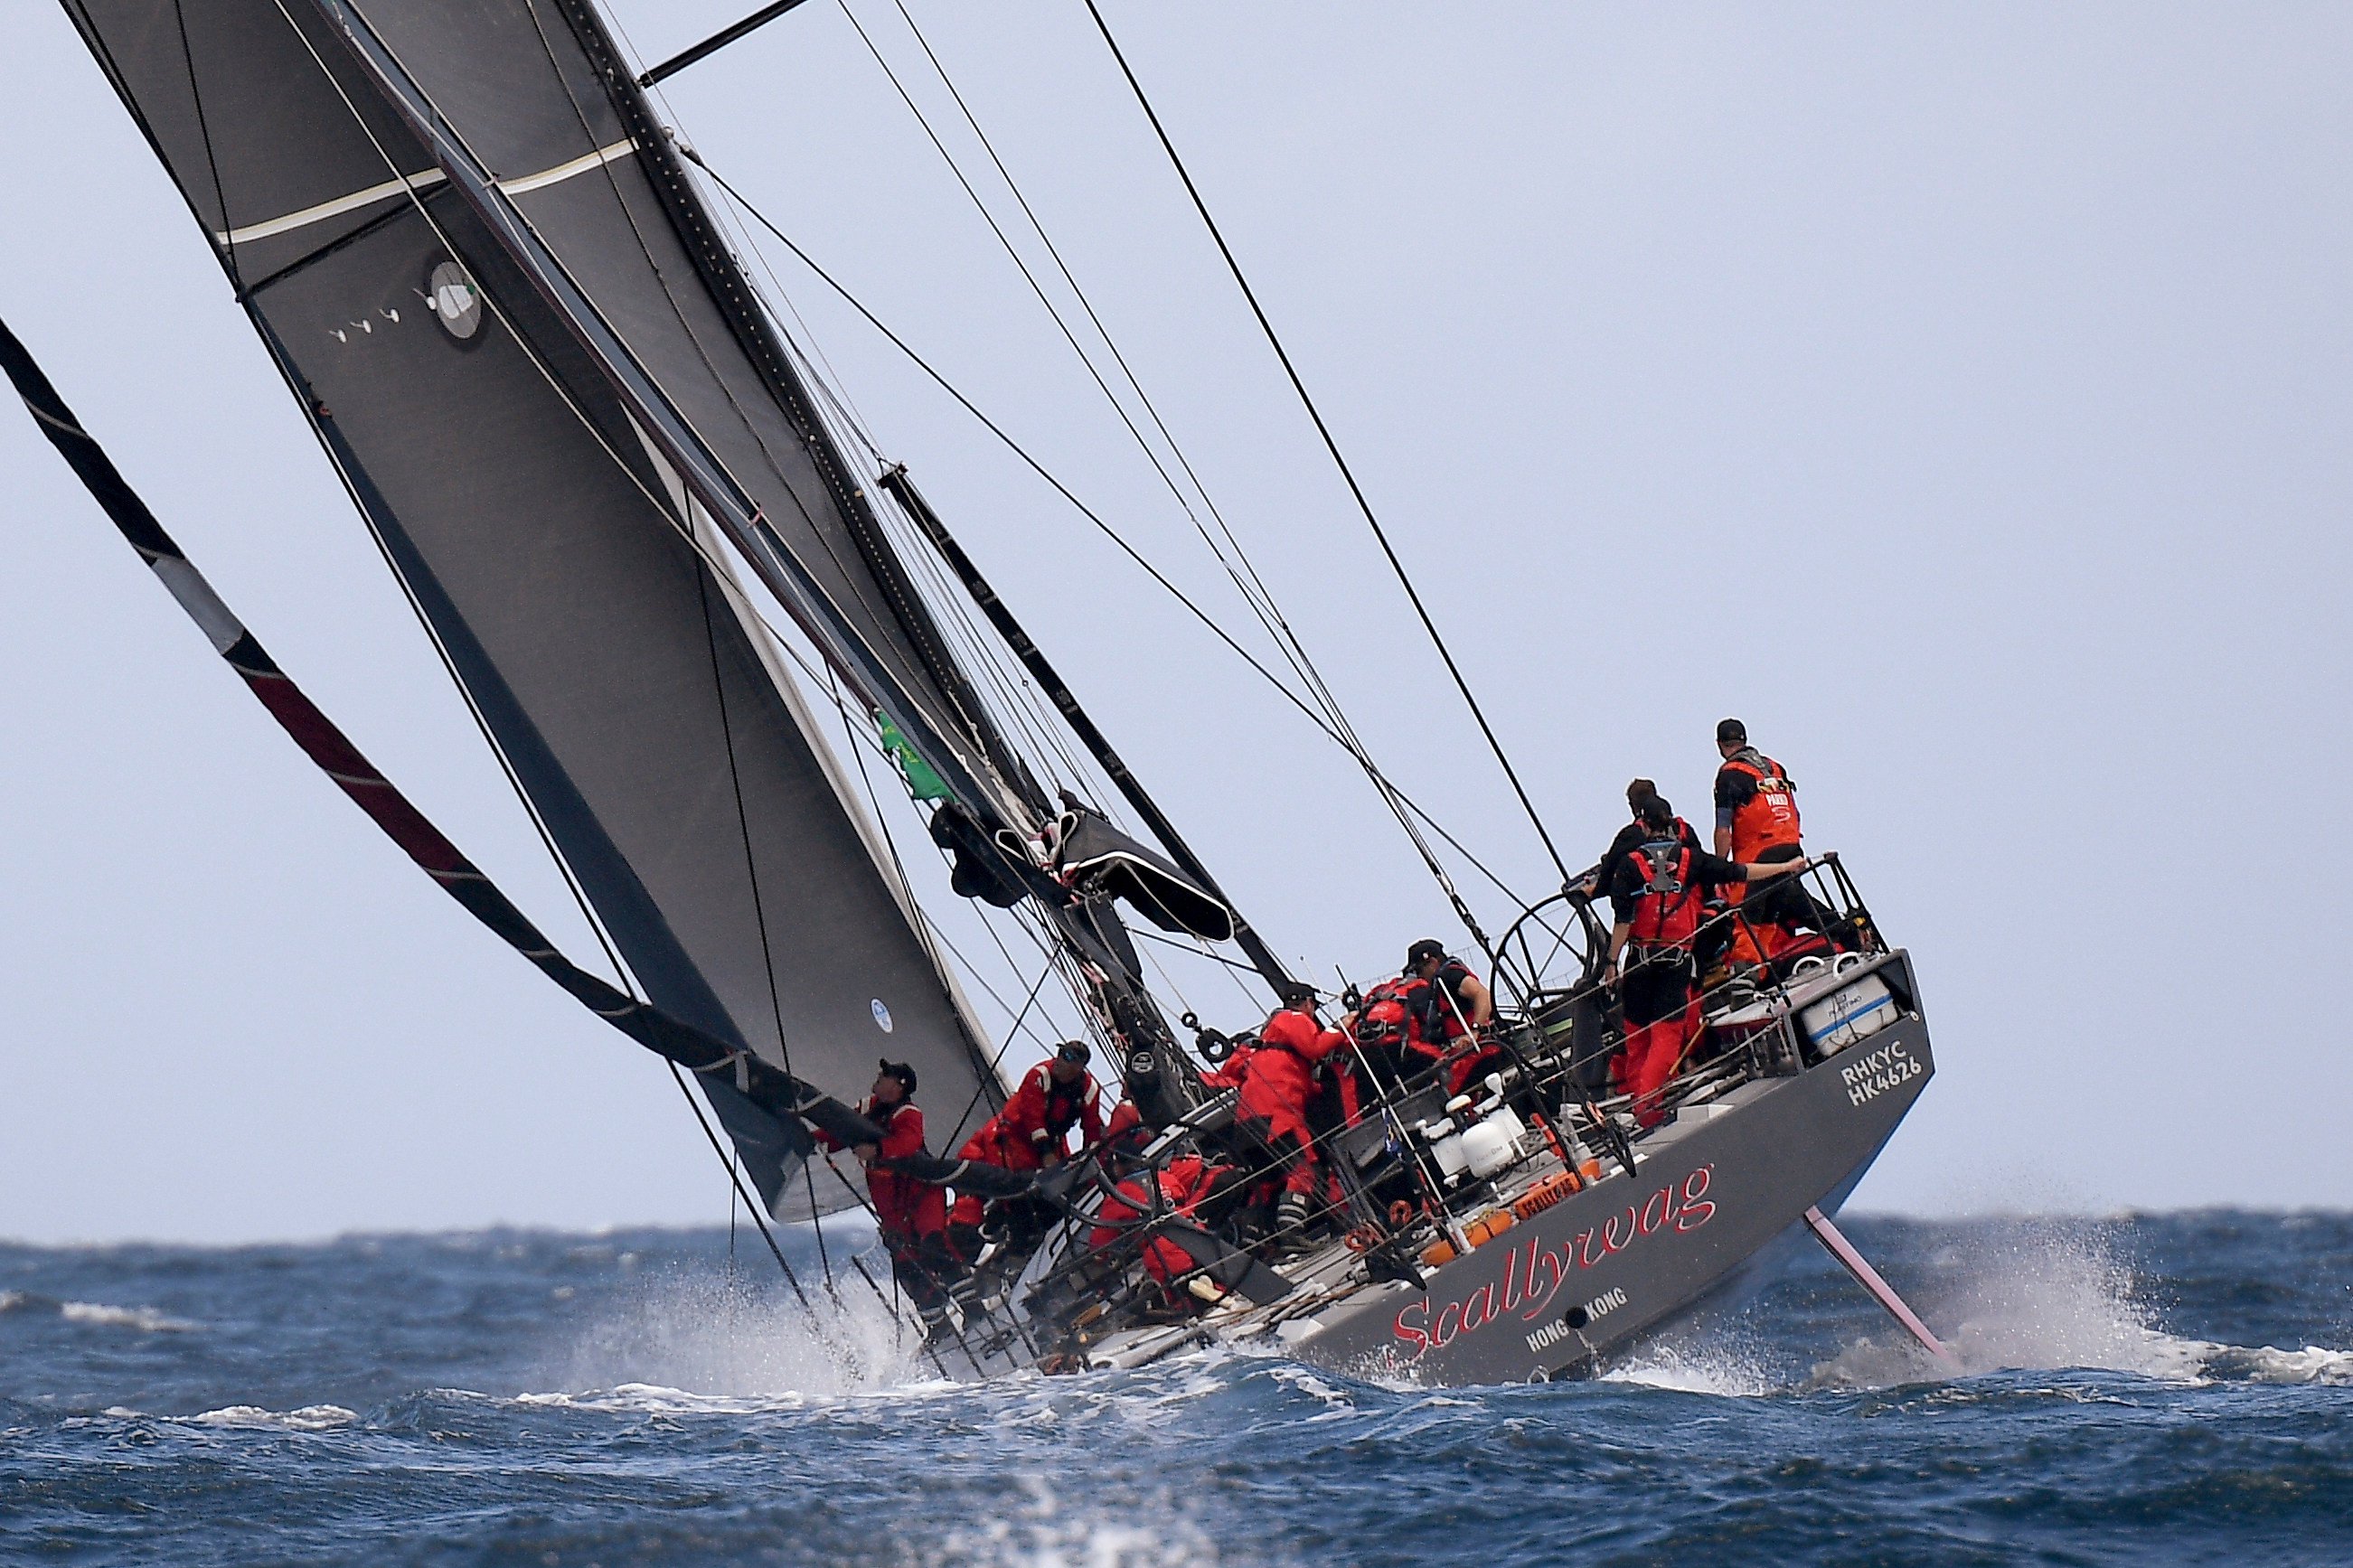 sydney to hobart yacht race book